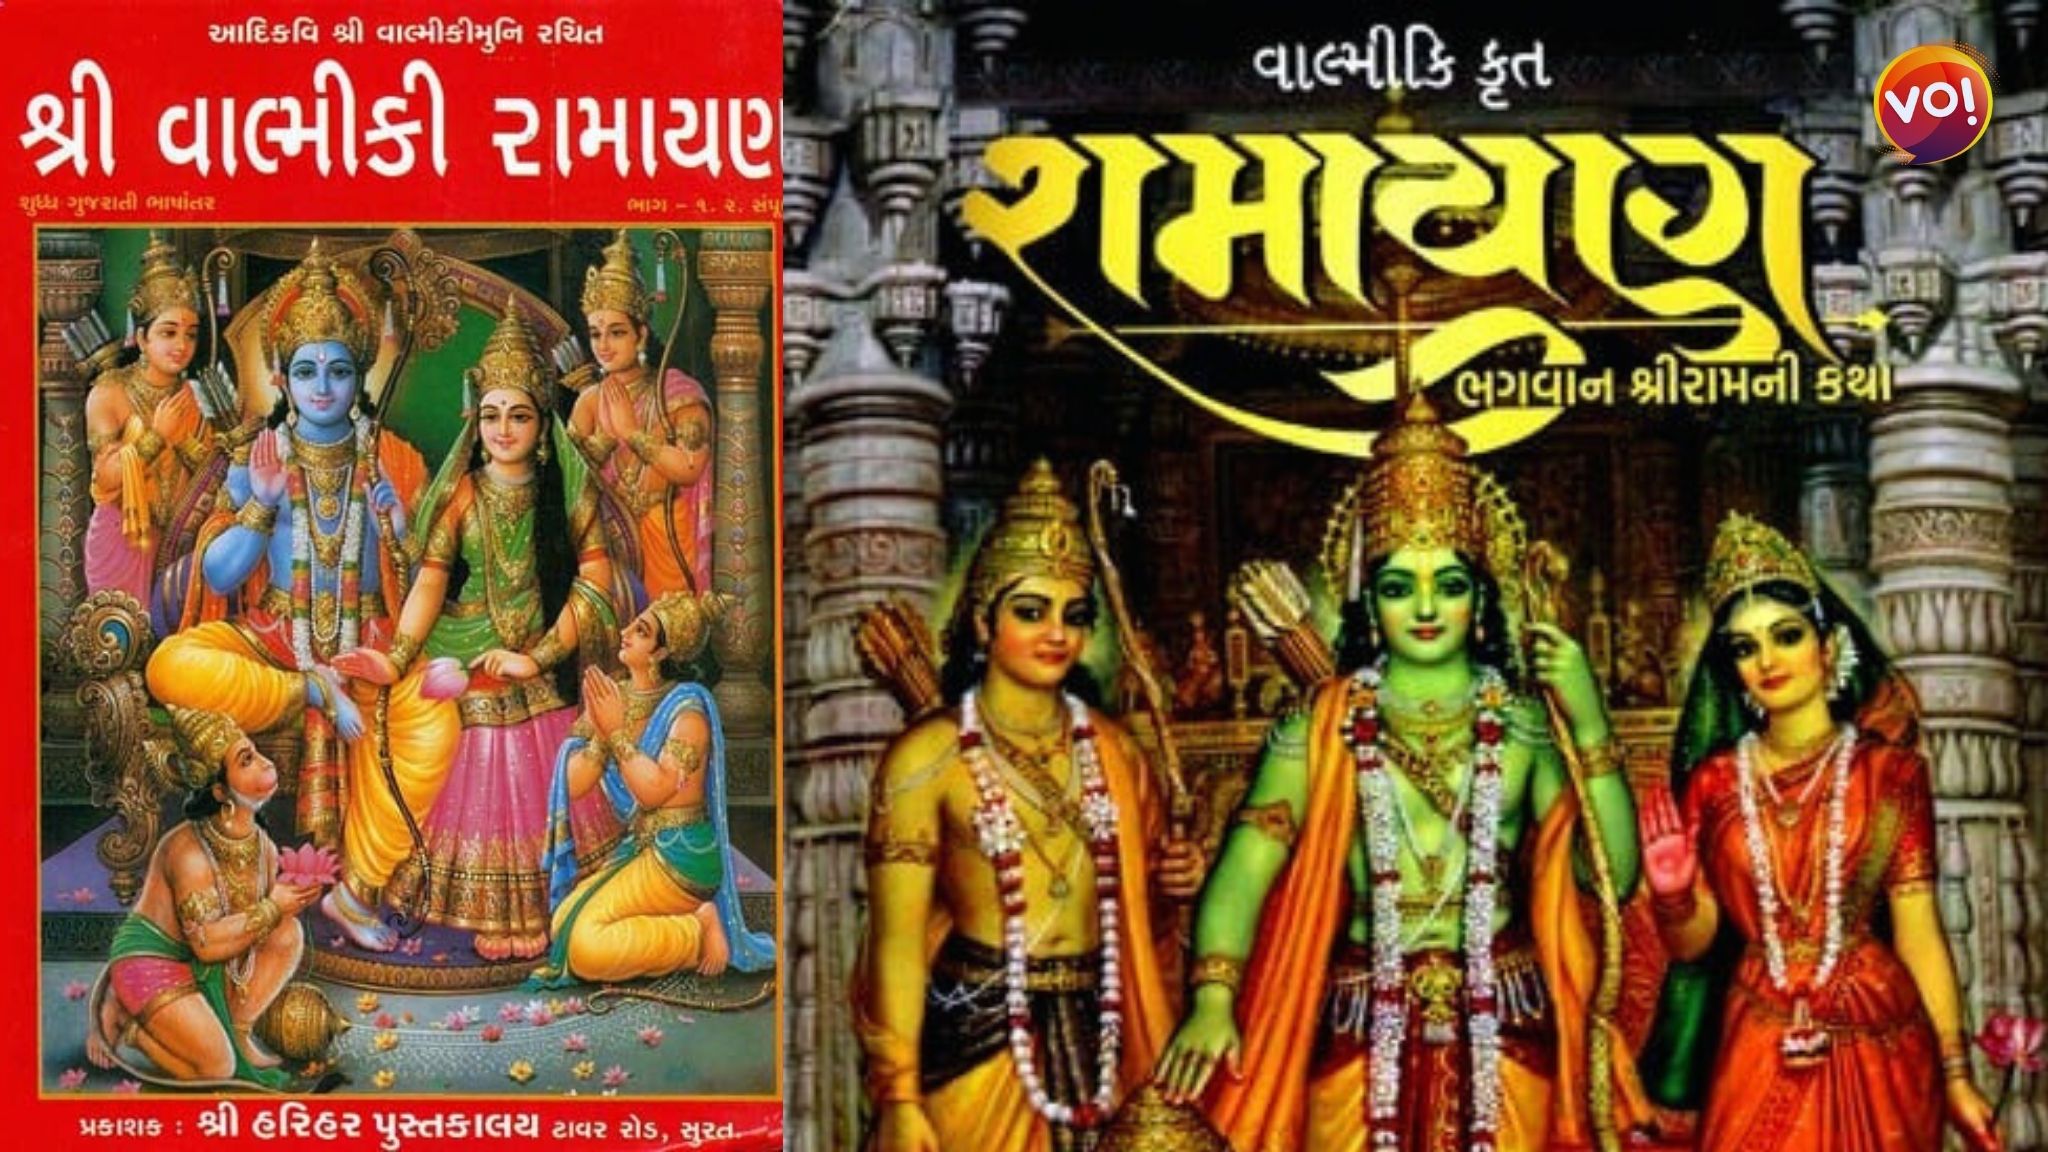 Historian Discovers Rare Musical Version Of Ramayana At Flea Market